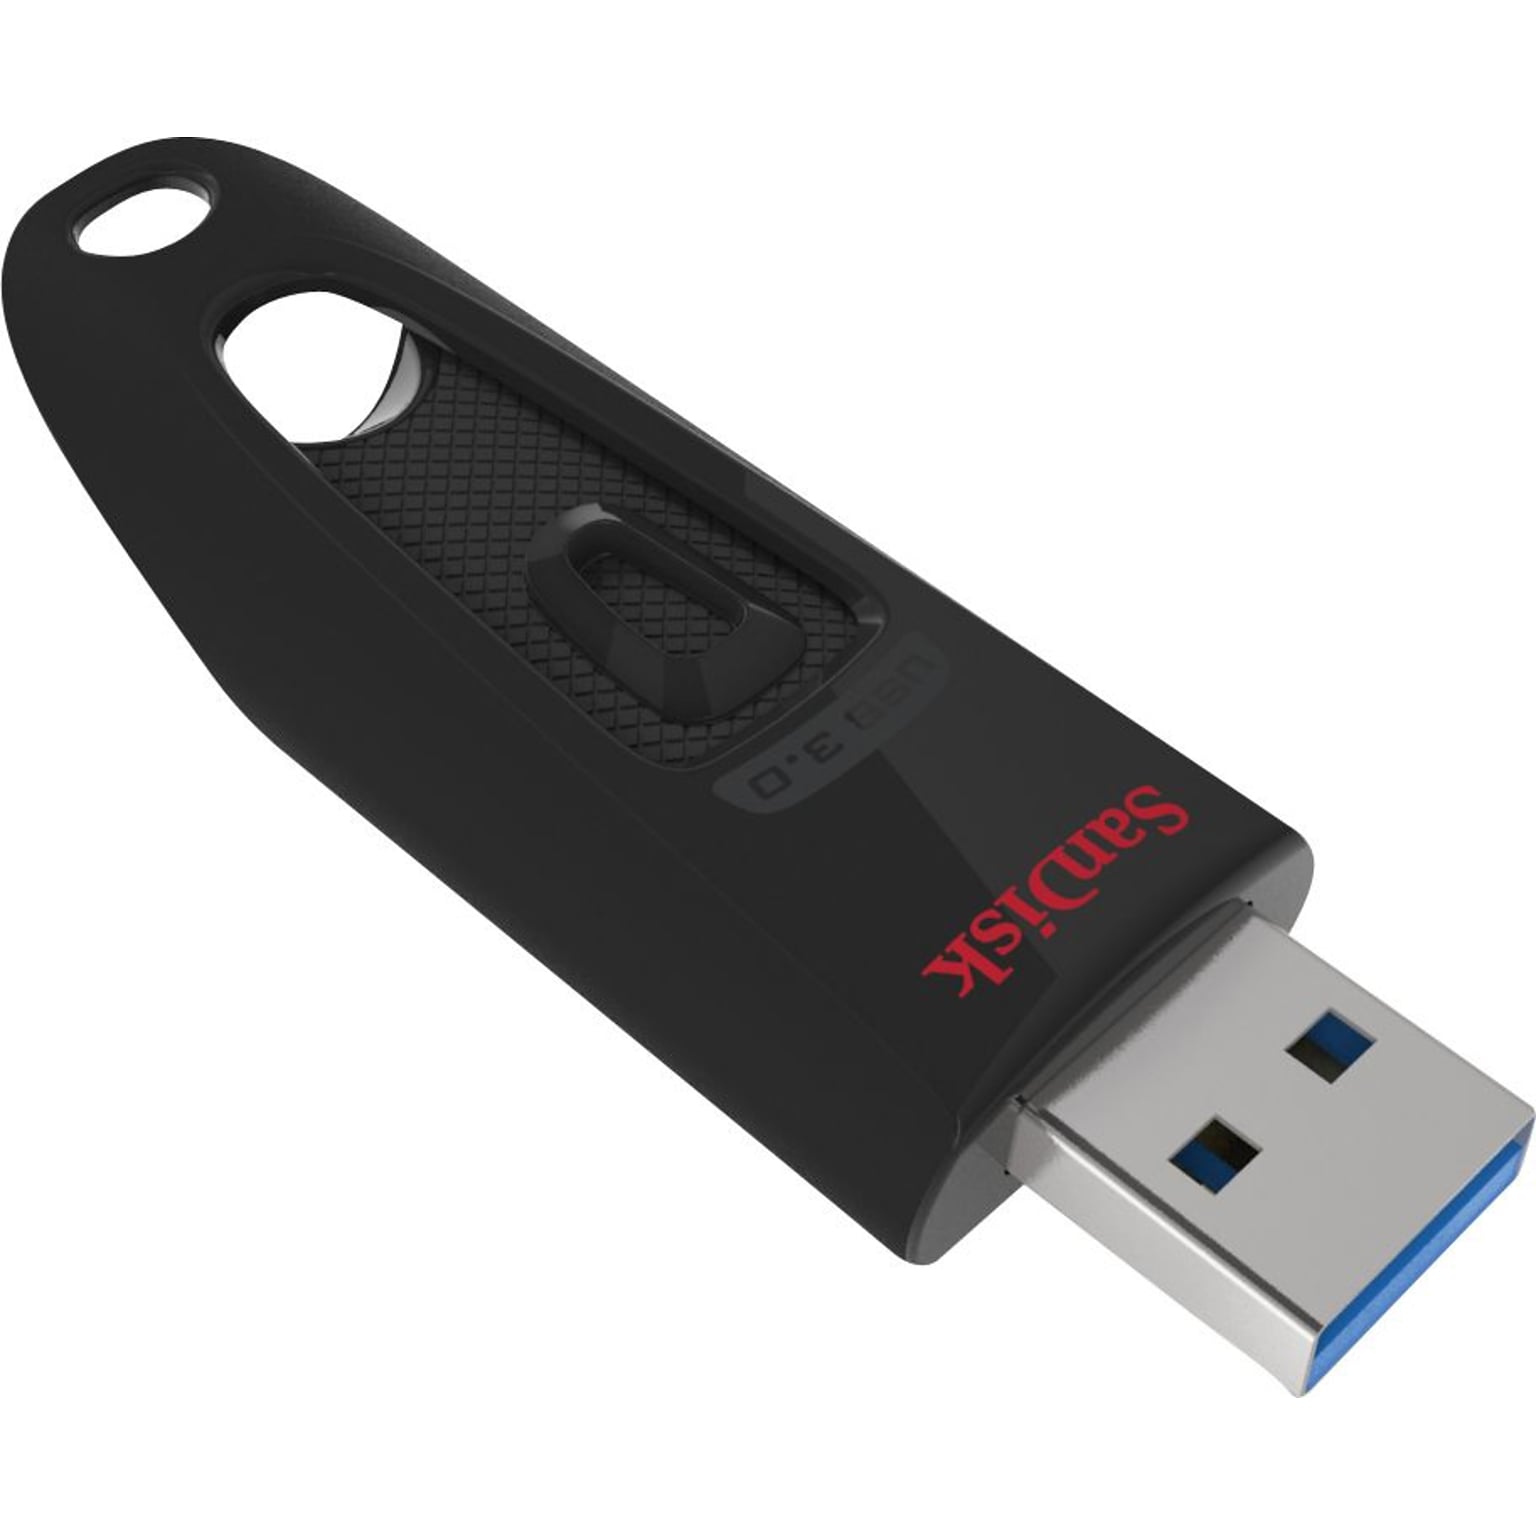 SanDisk Ultra 64GB USB 3.0 Flash Drive, Sleek Black (SDCZ48-064G-A46)